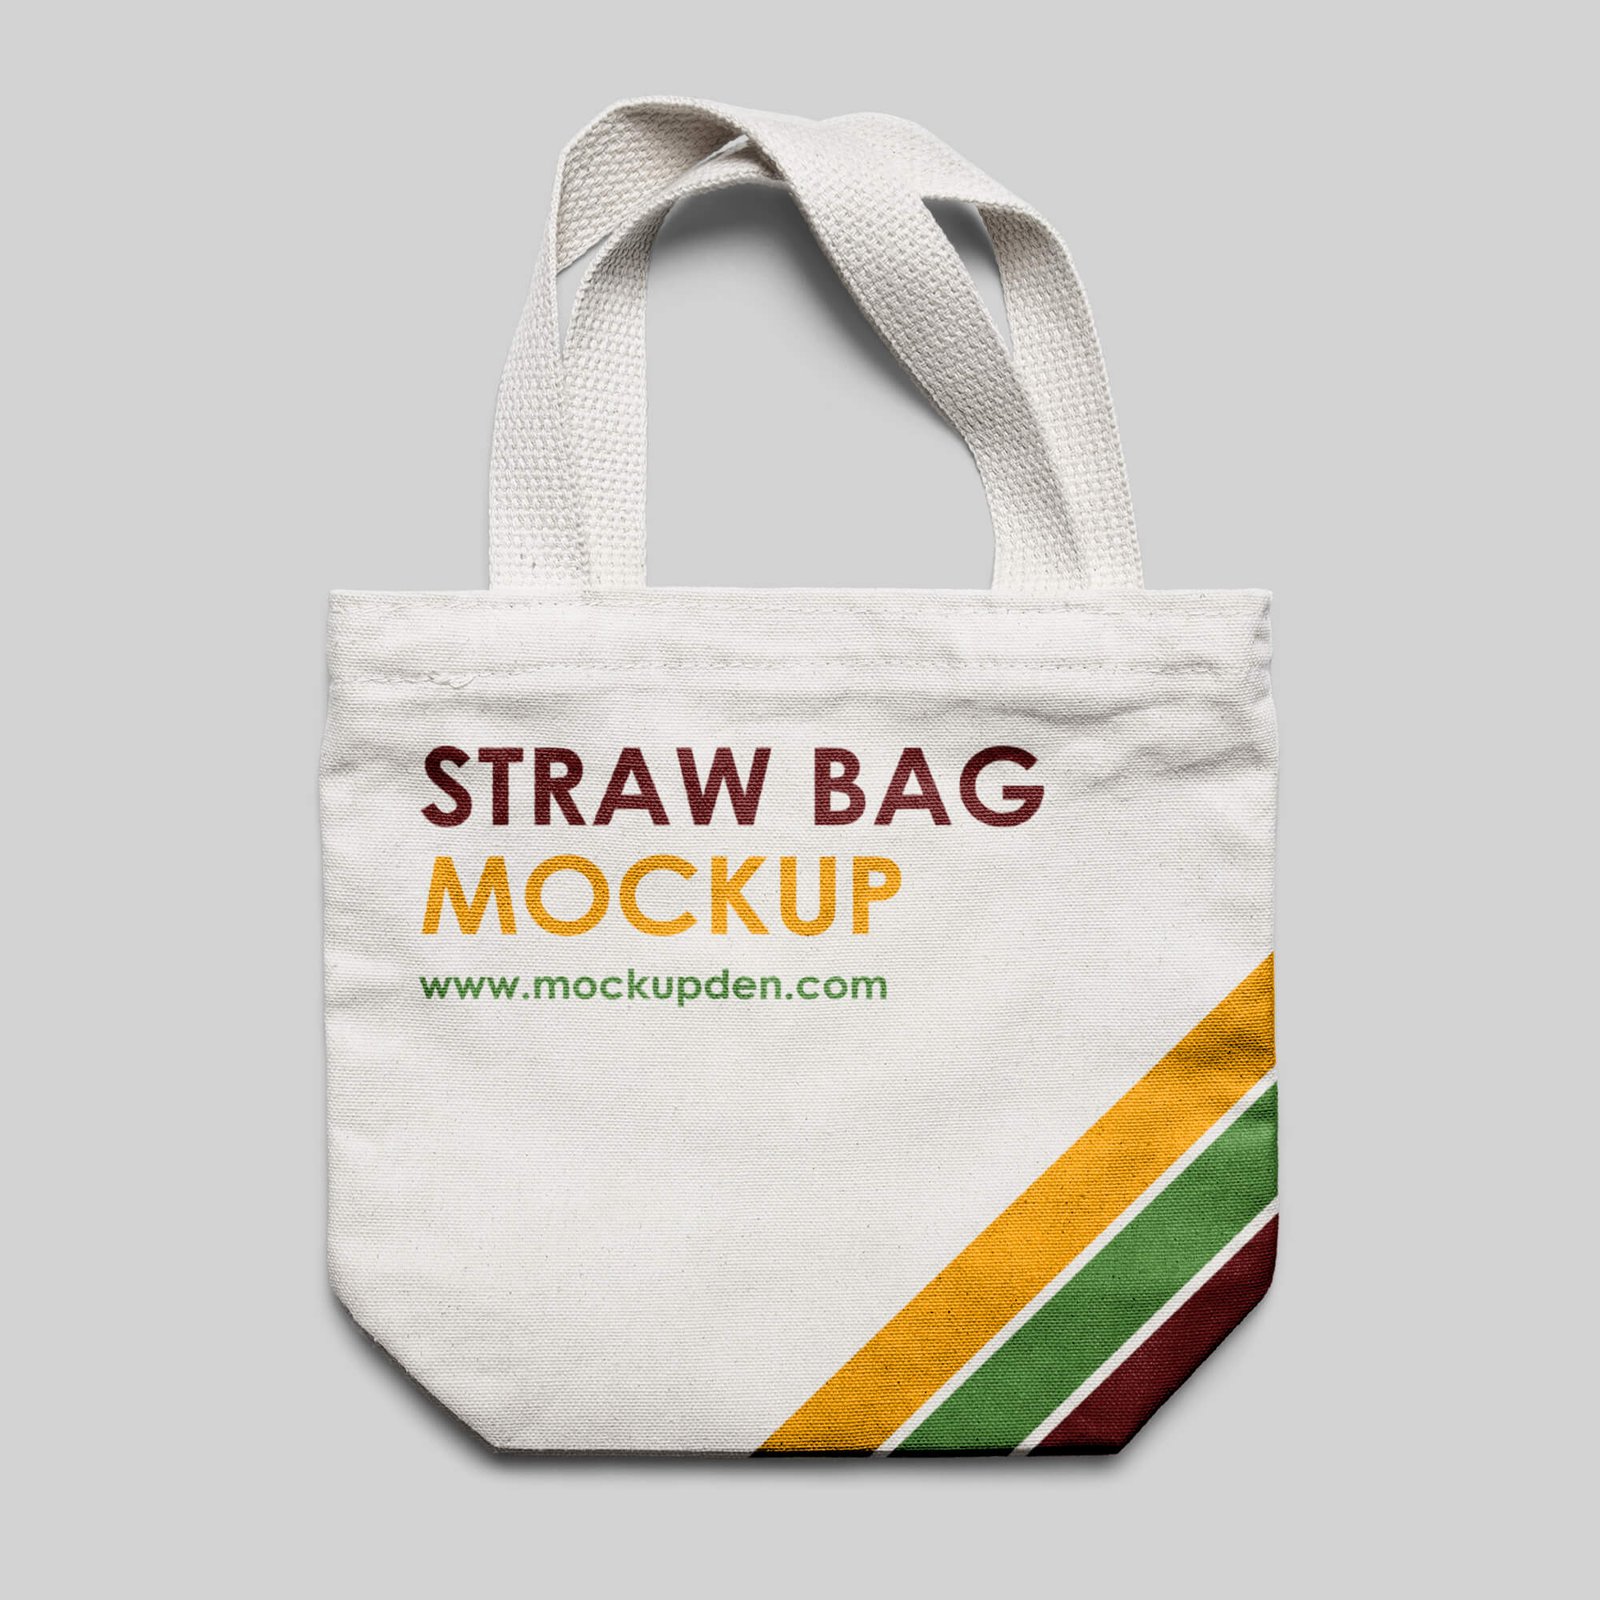 Design Free Straw Bag Mockup PSD Template